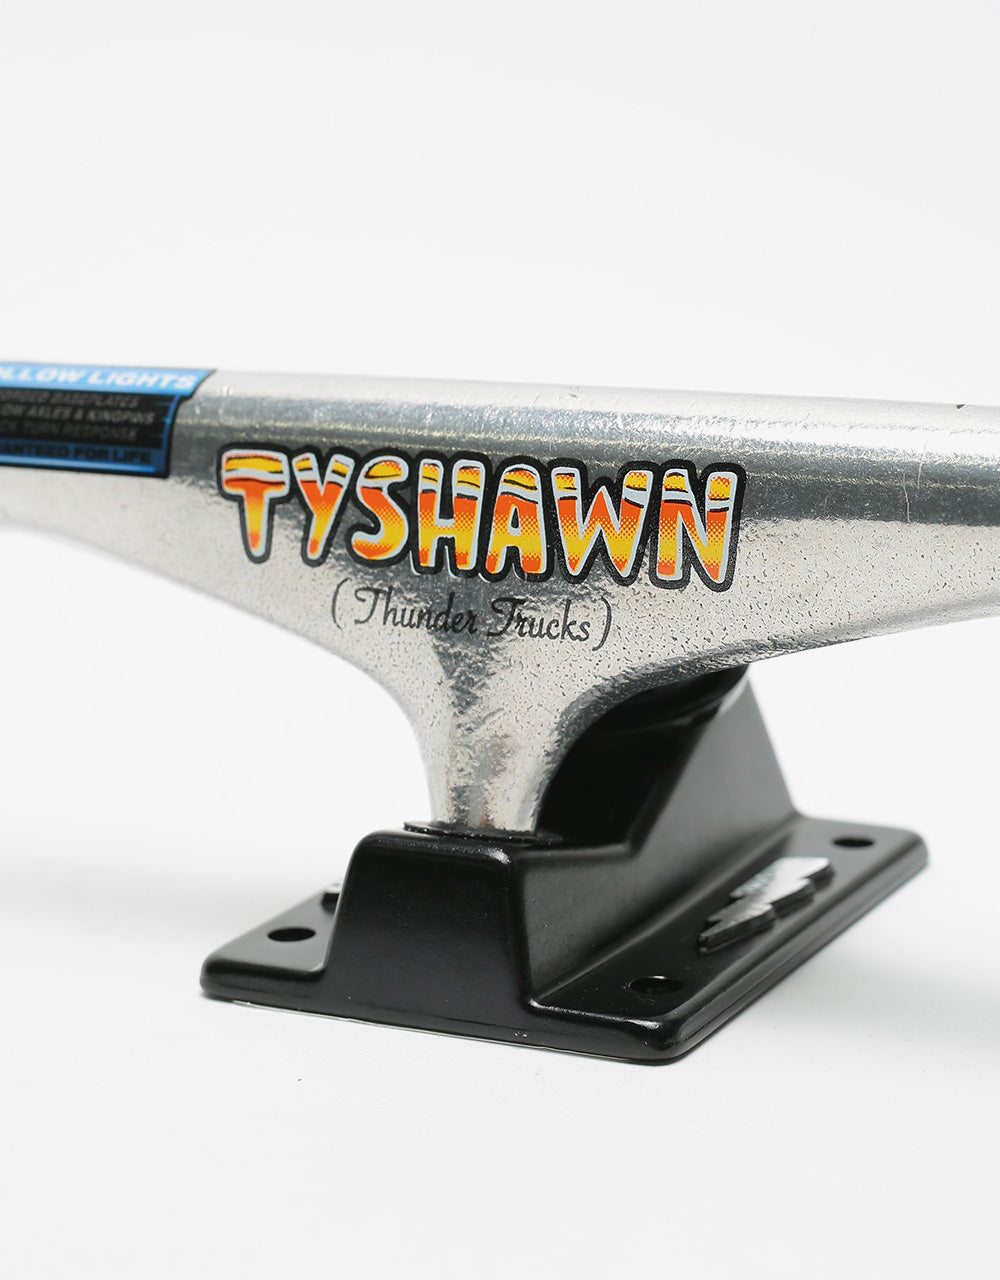 Thunder Tyshawn So Good Hollow Lights 151 High Skateboard Trucks (Pair)